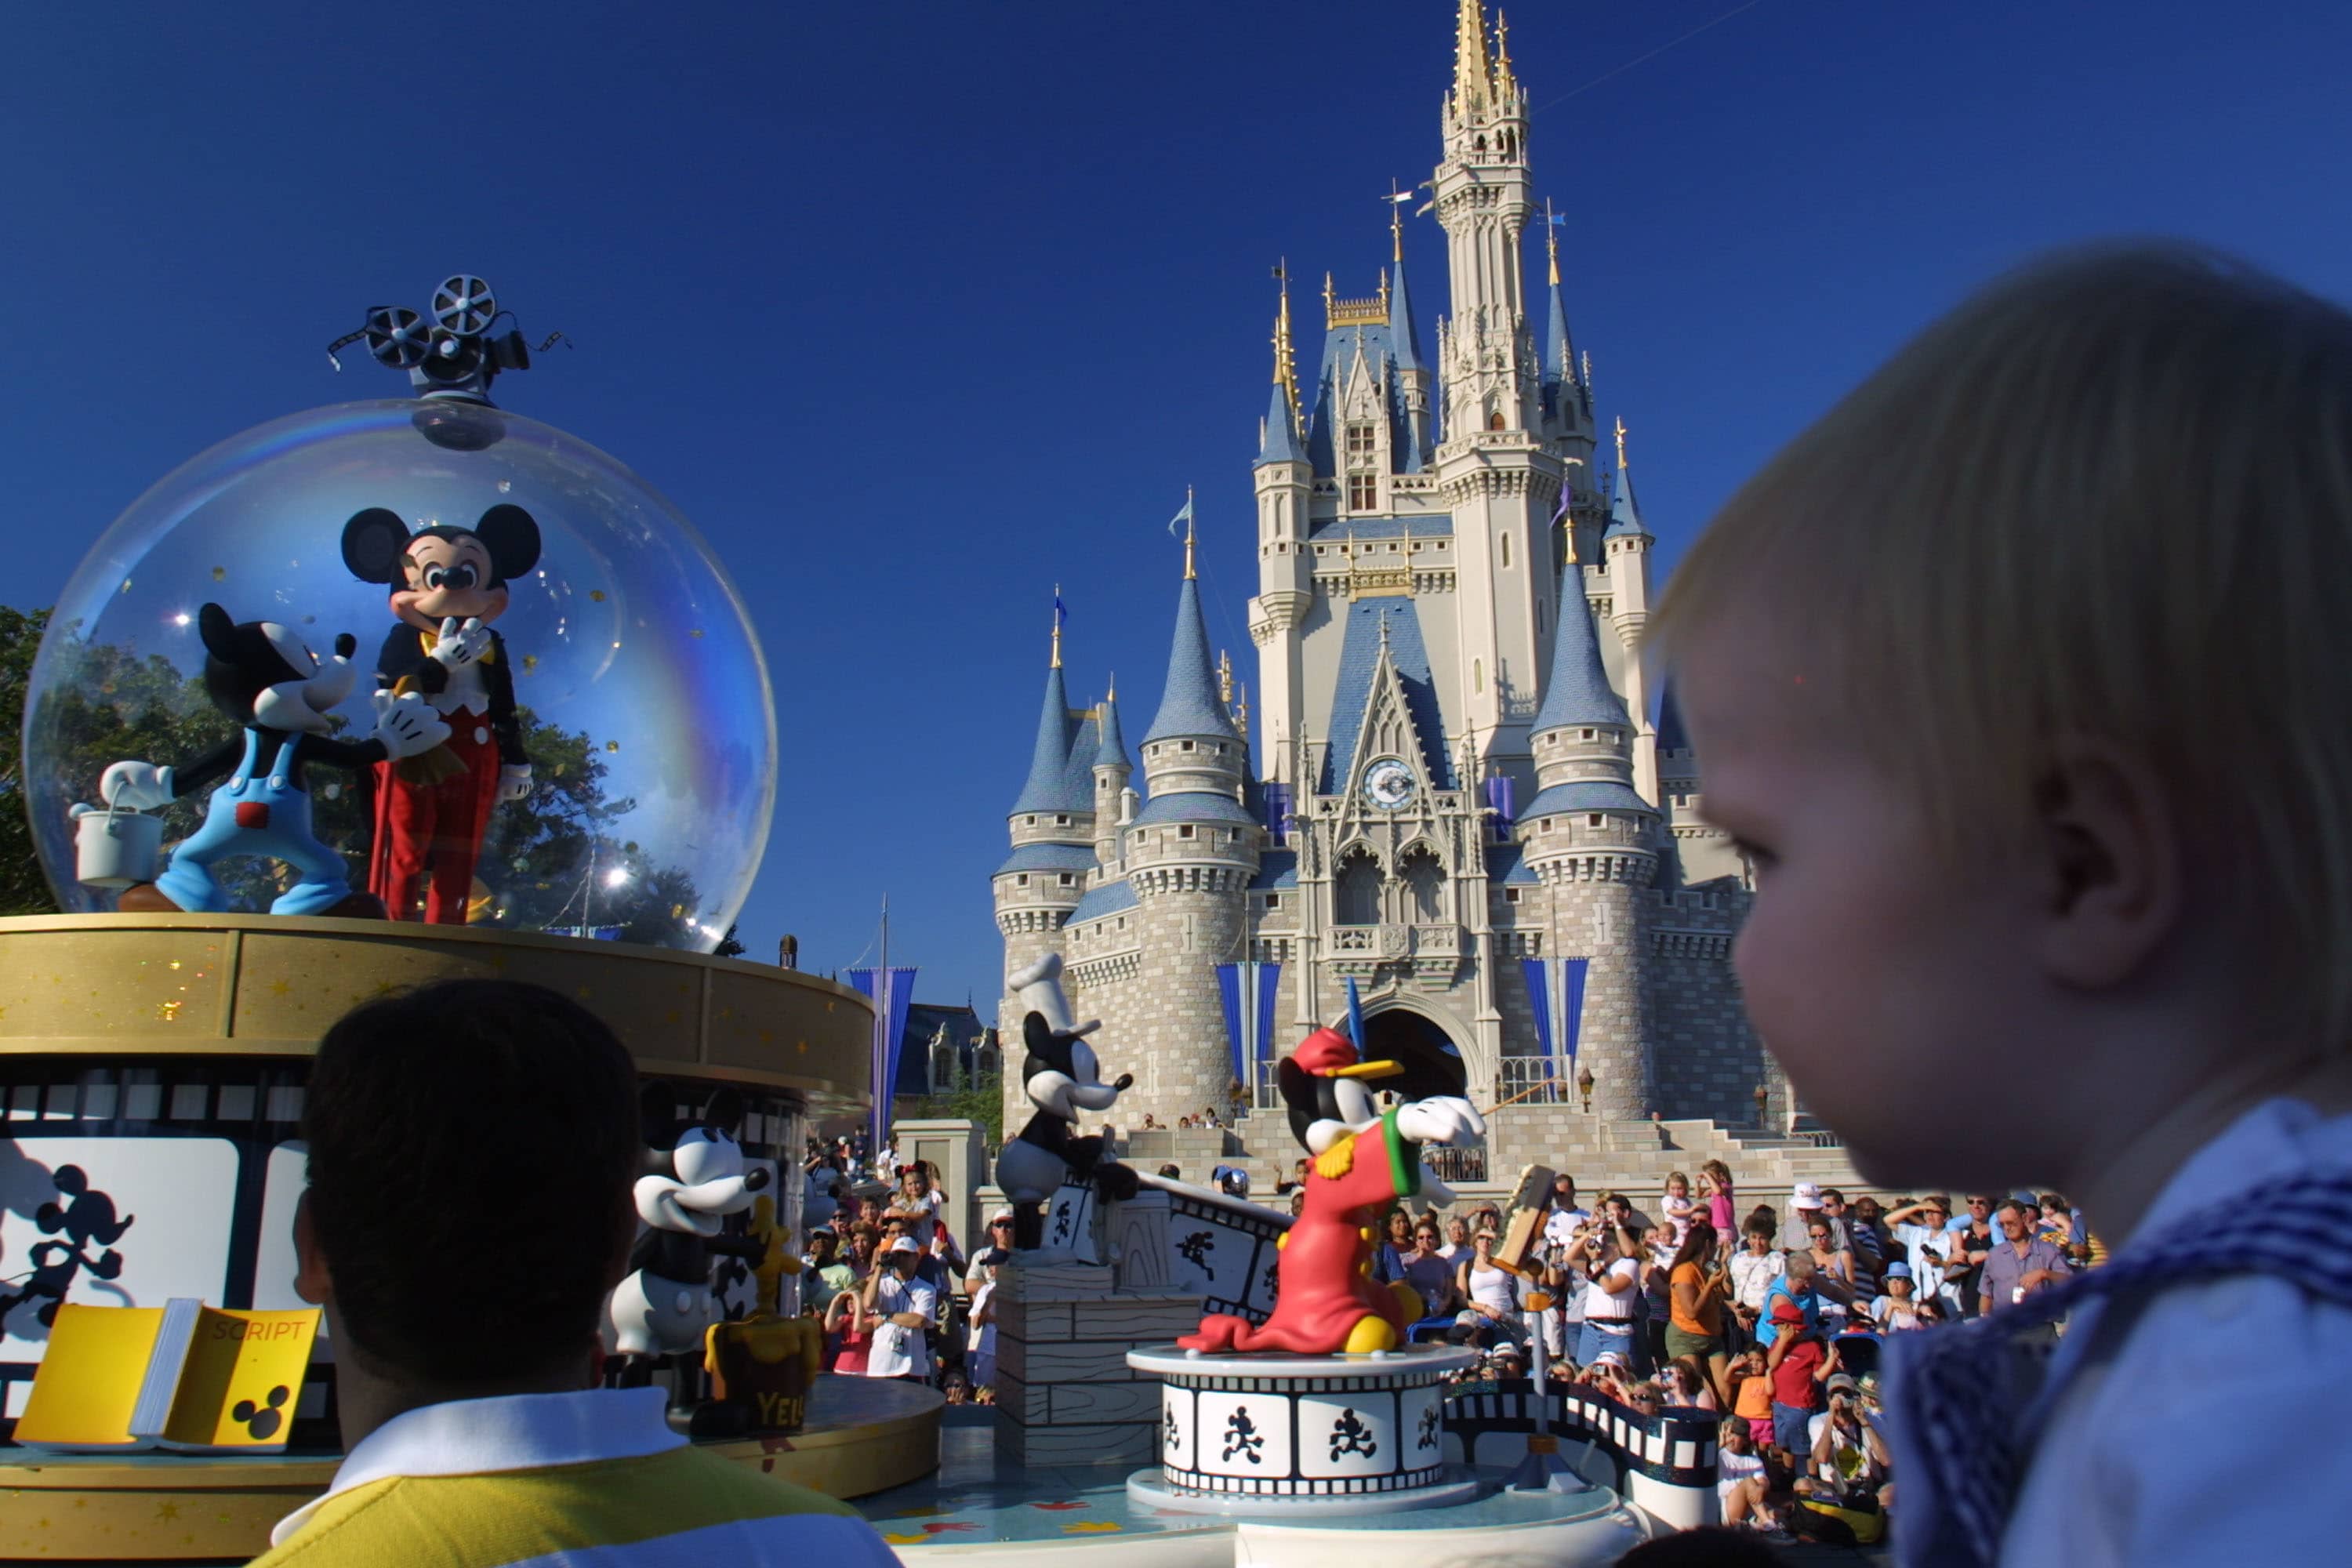 Wells Fargo gives a bullish endorsement to a beleaguered Disney. We're awaiting Iger's turnaround plan